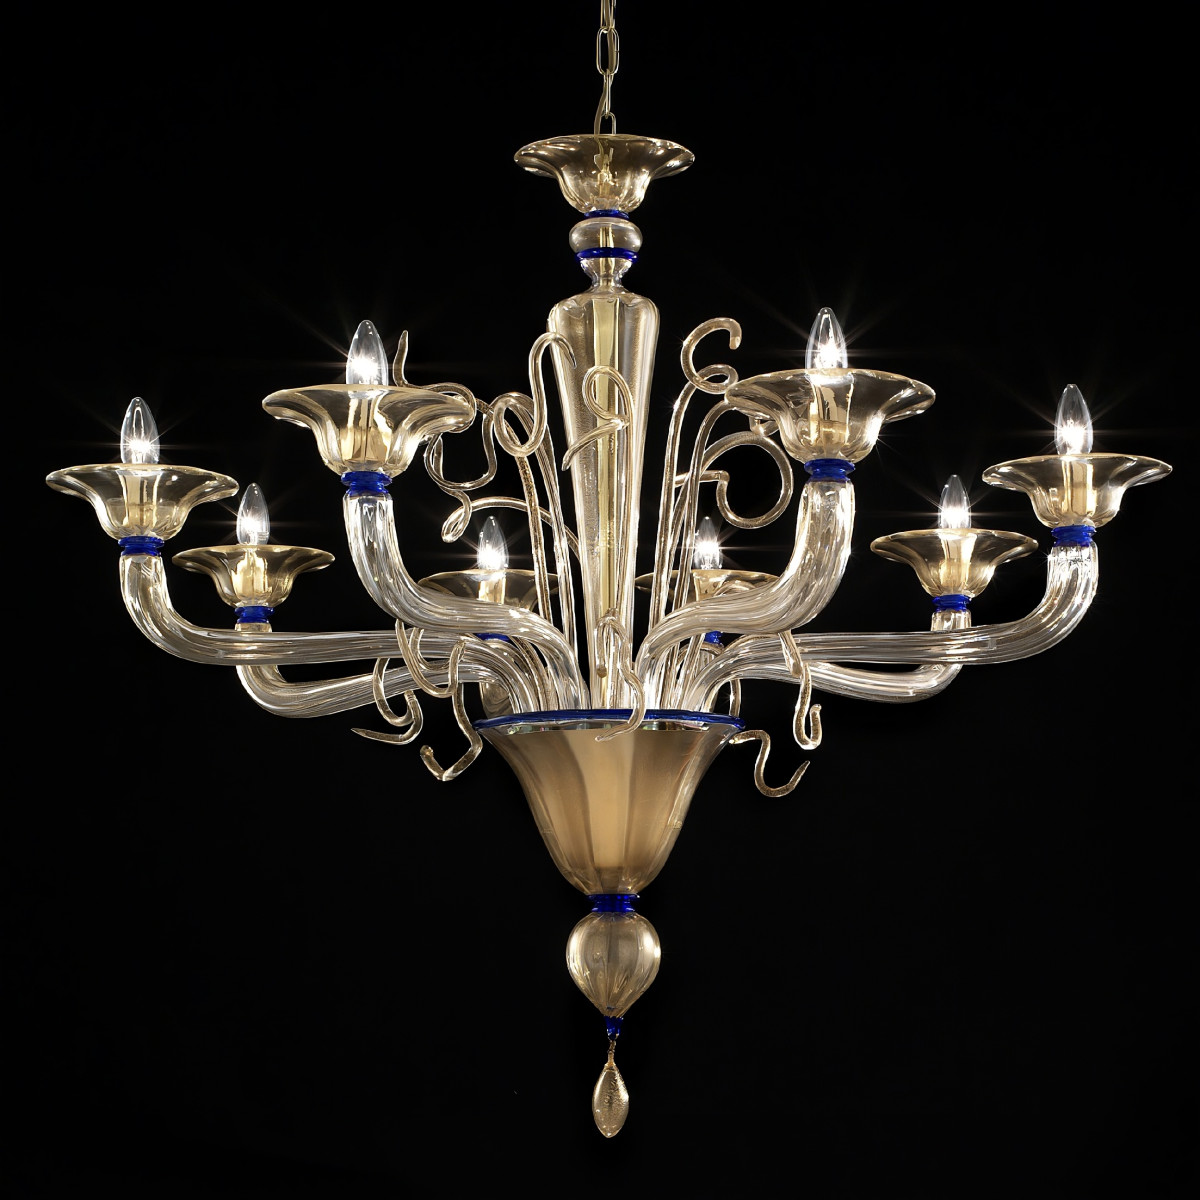 Cannaregio Murano chandelier gold and blue